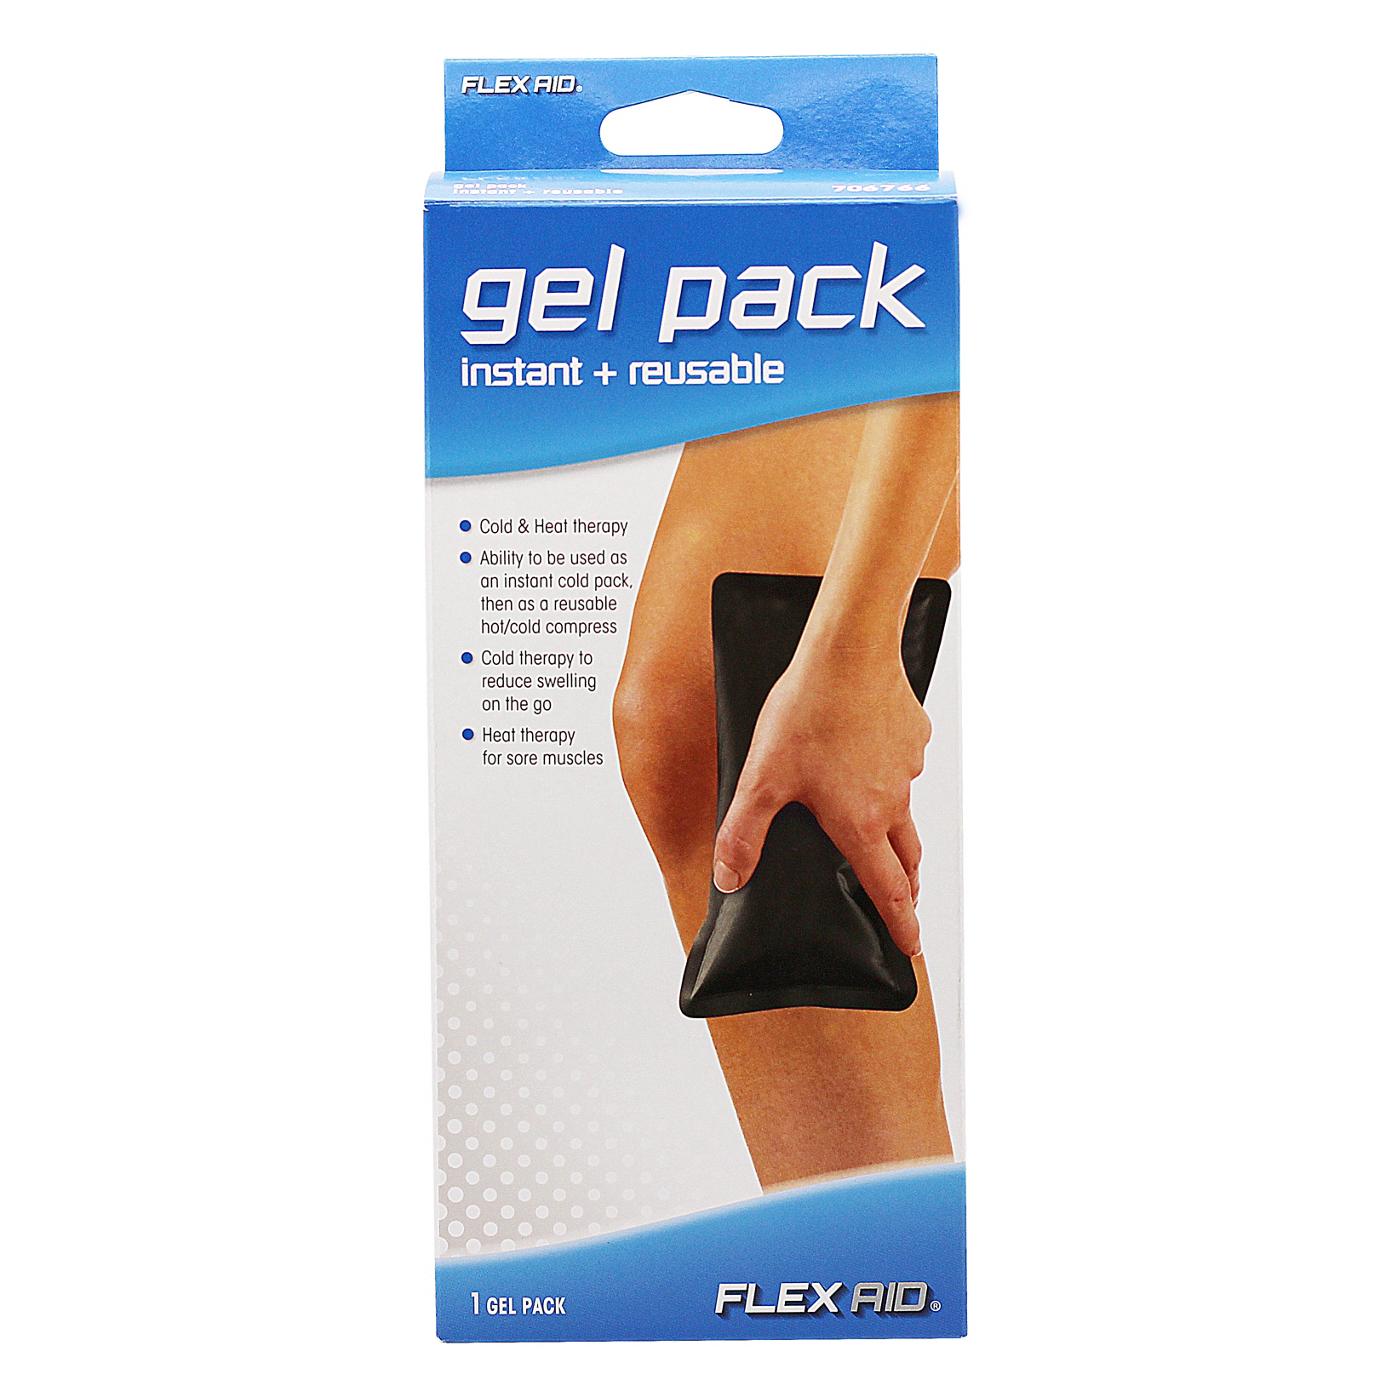 Flex Aid Gel Pack Instant + Reusable; image 1 of 2